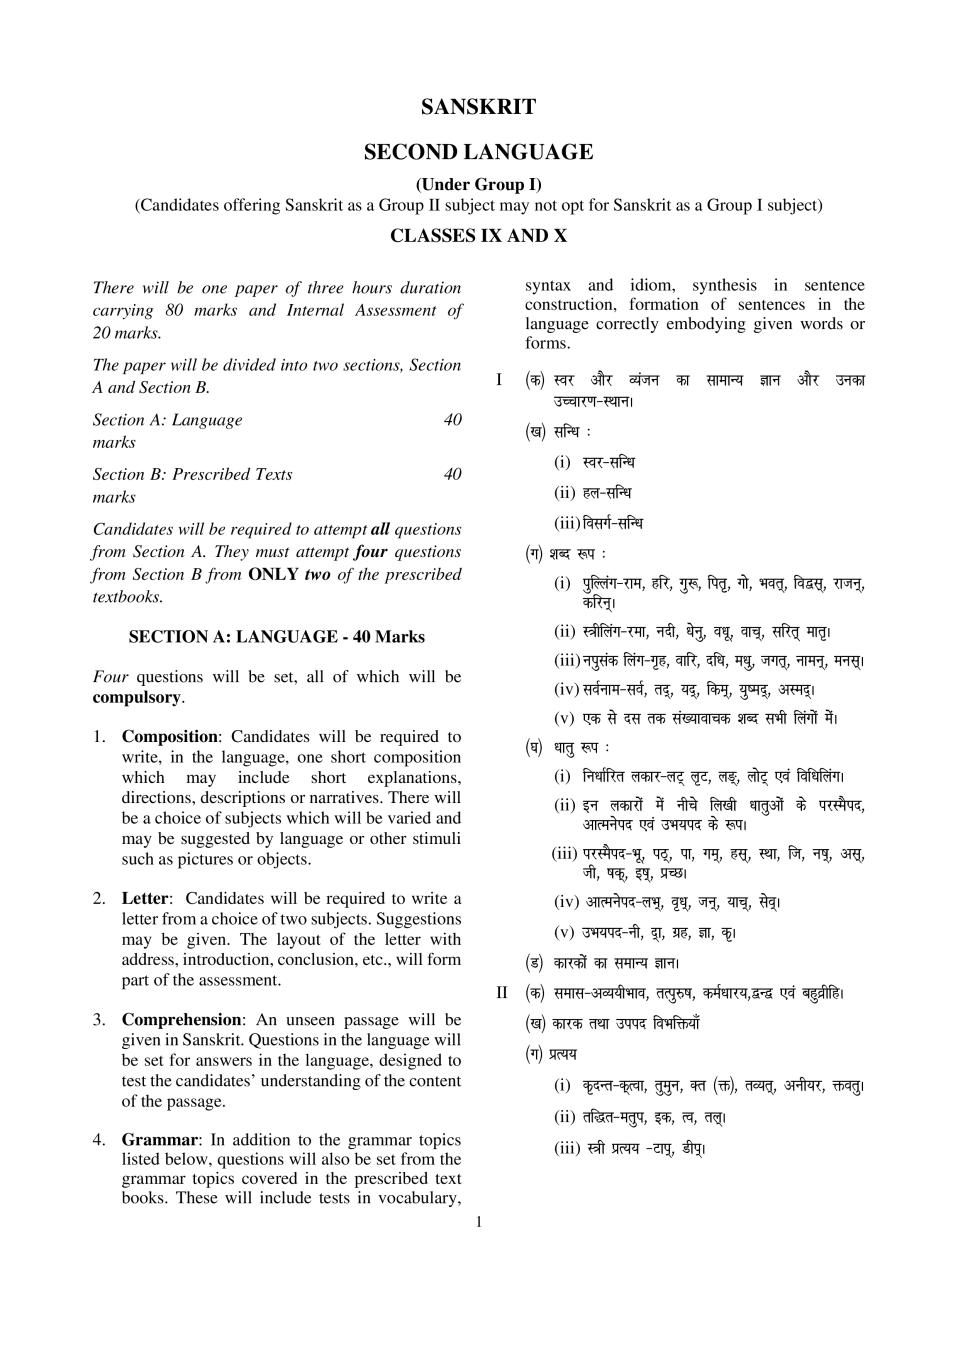 ICSE Class 10 Second Language Sanskrit Syllabus 2020 - Page 1